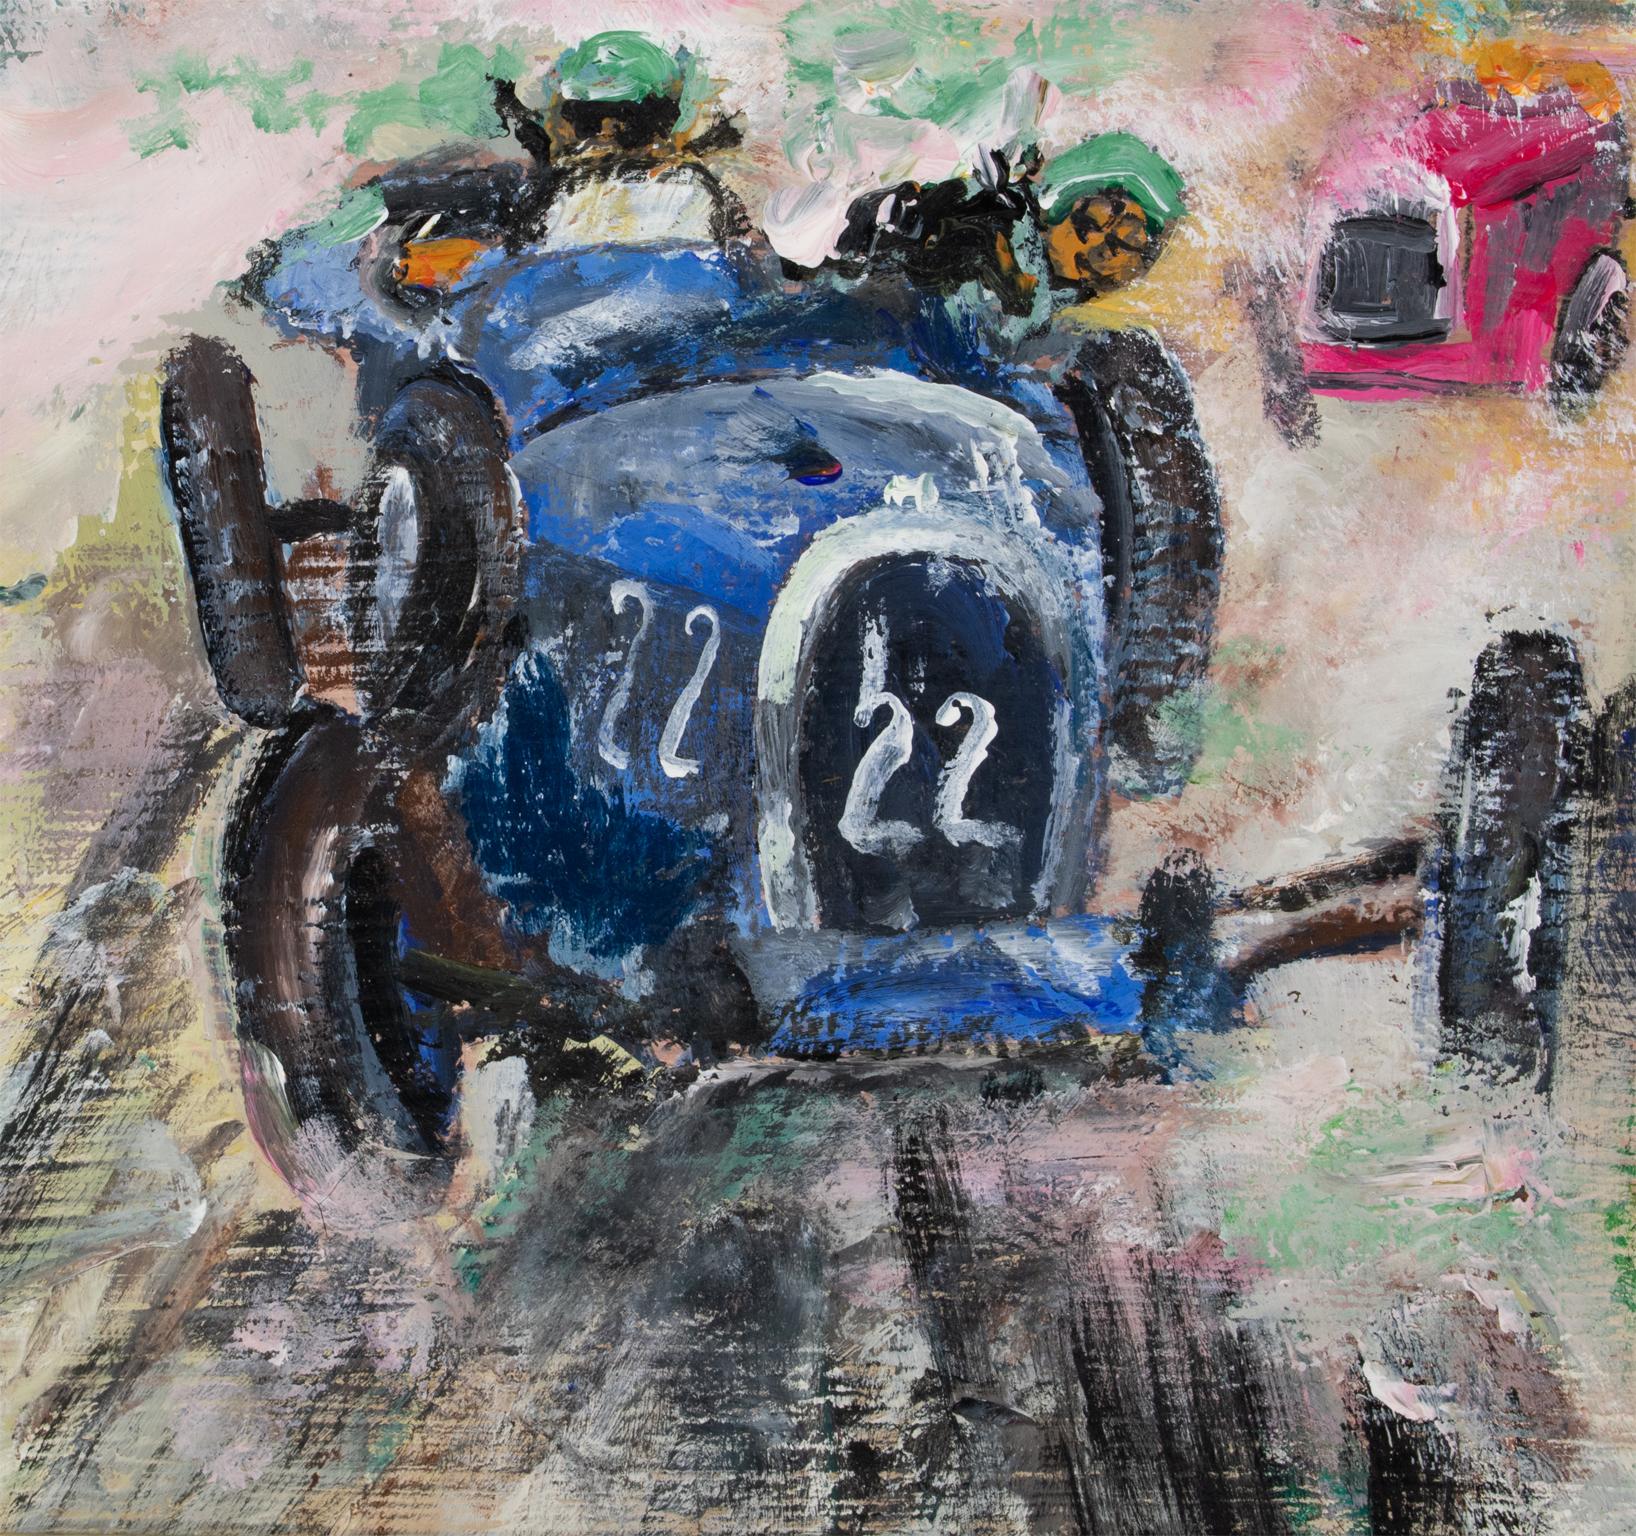 Bugatti Car Race in Monaco 1931, Oil on Canvas Painting by Rene Petit 9